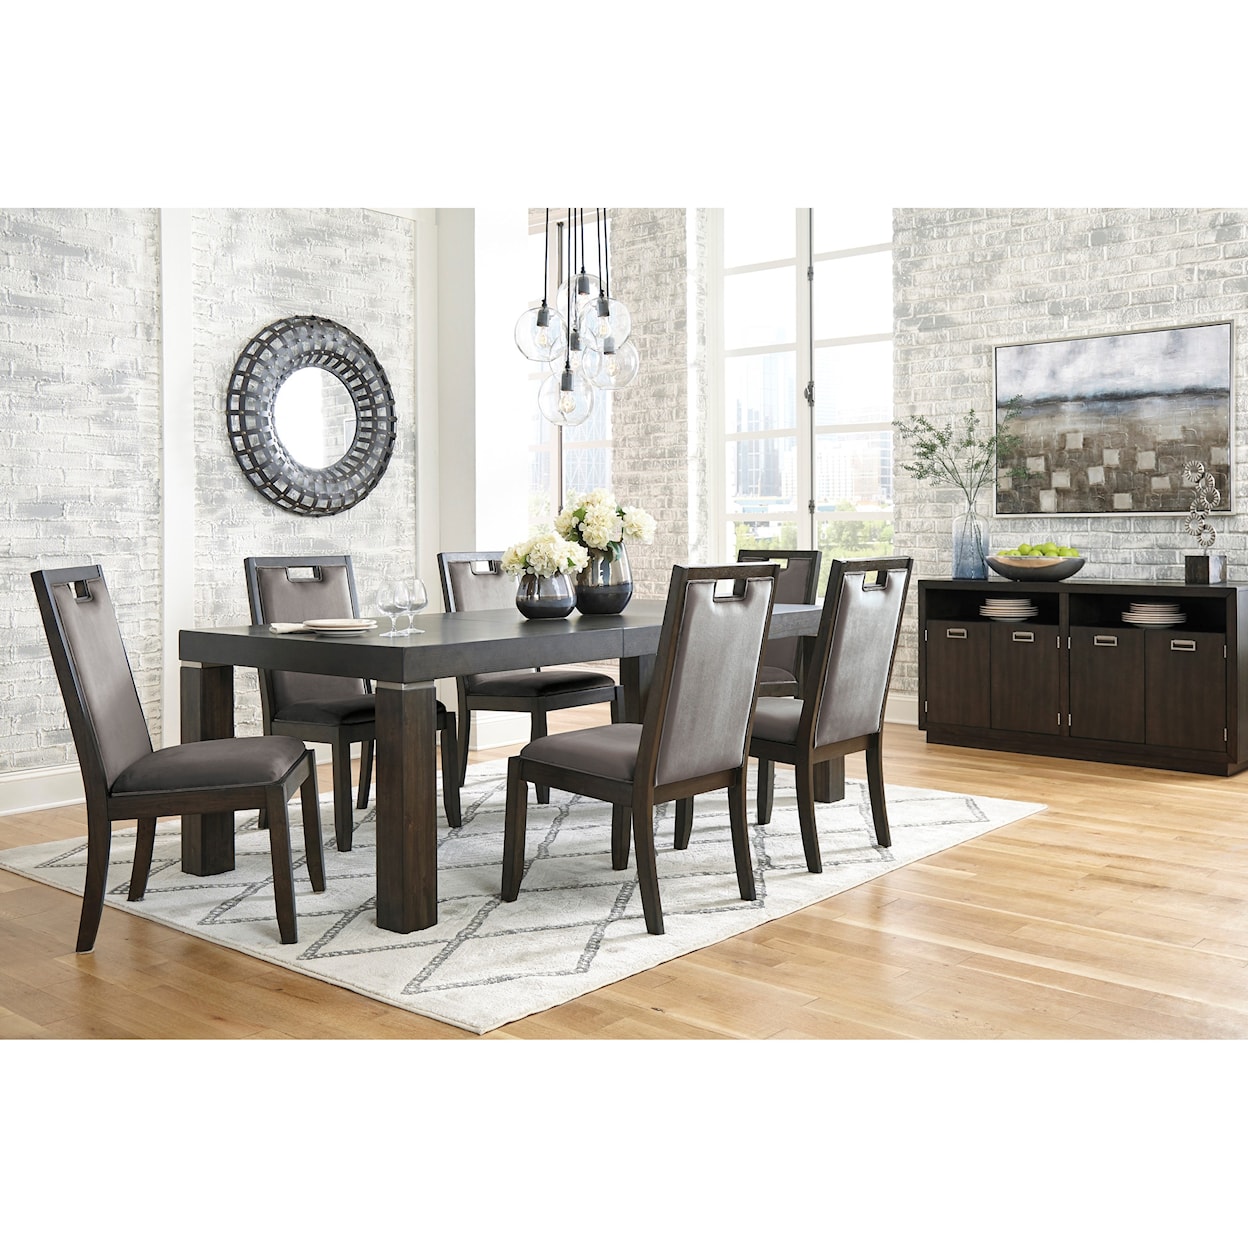 Ashley Furniture Signature Design Hyndell Dining Room Server